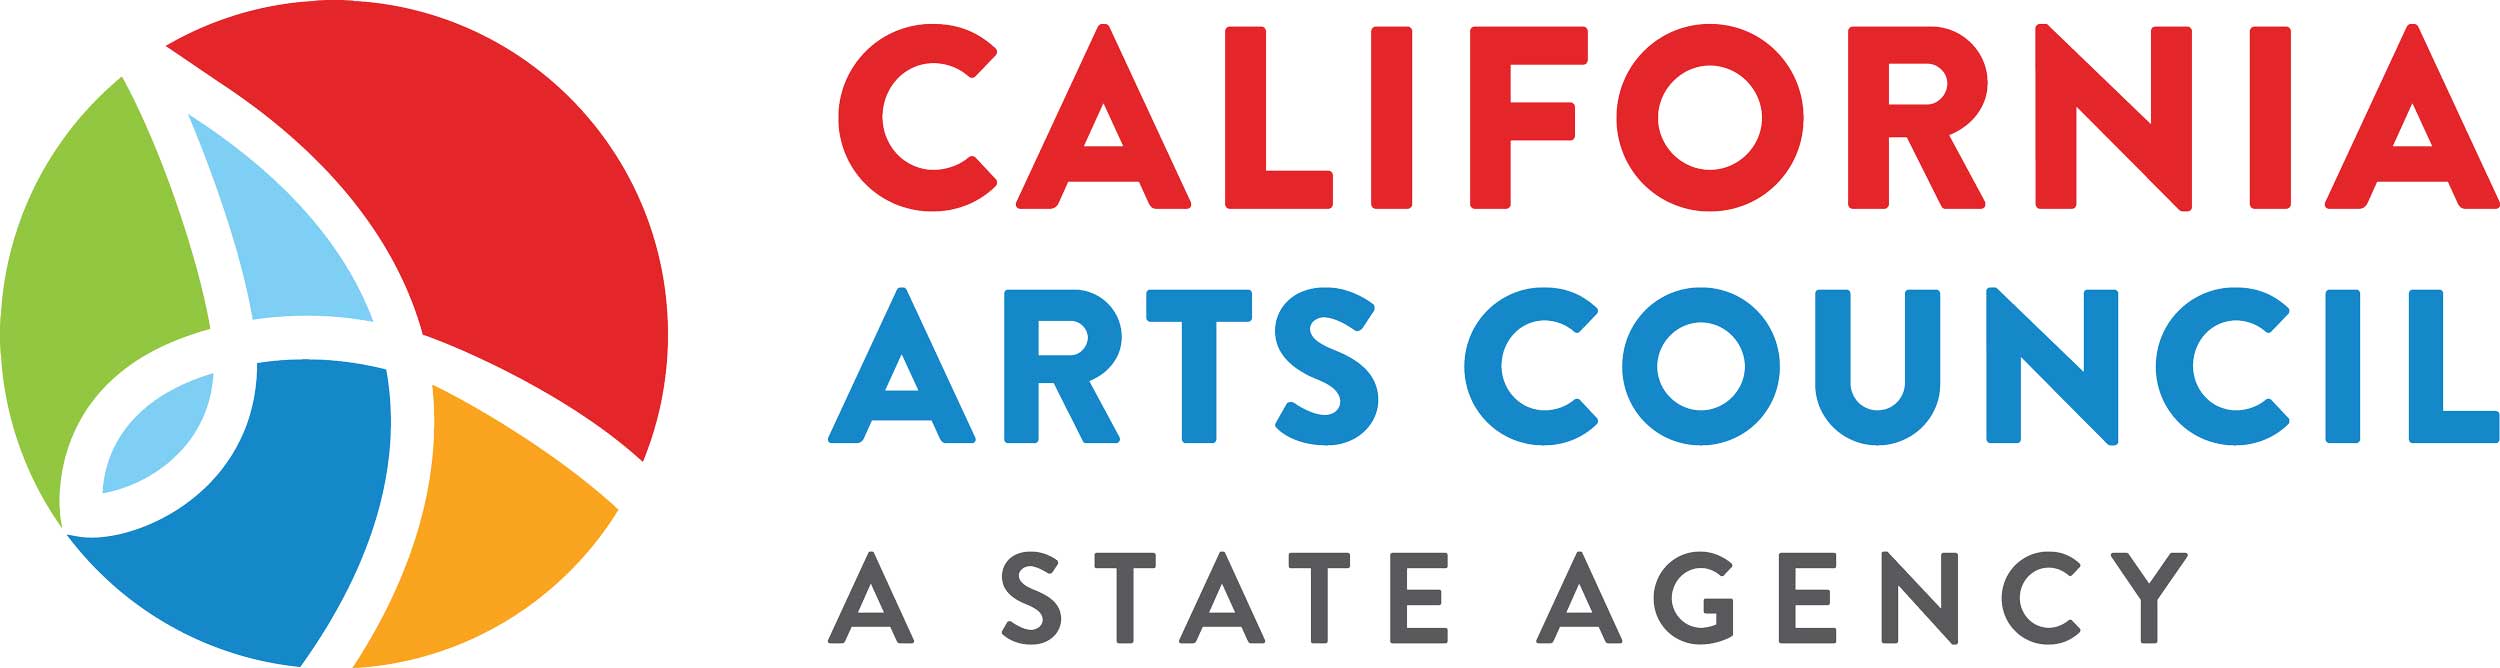 Home Page - California Arts Council